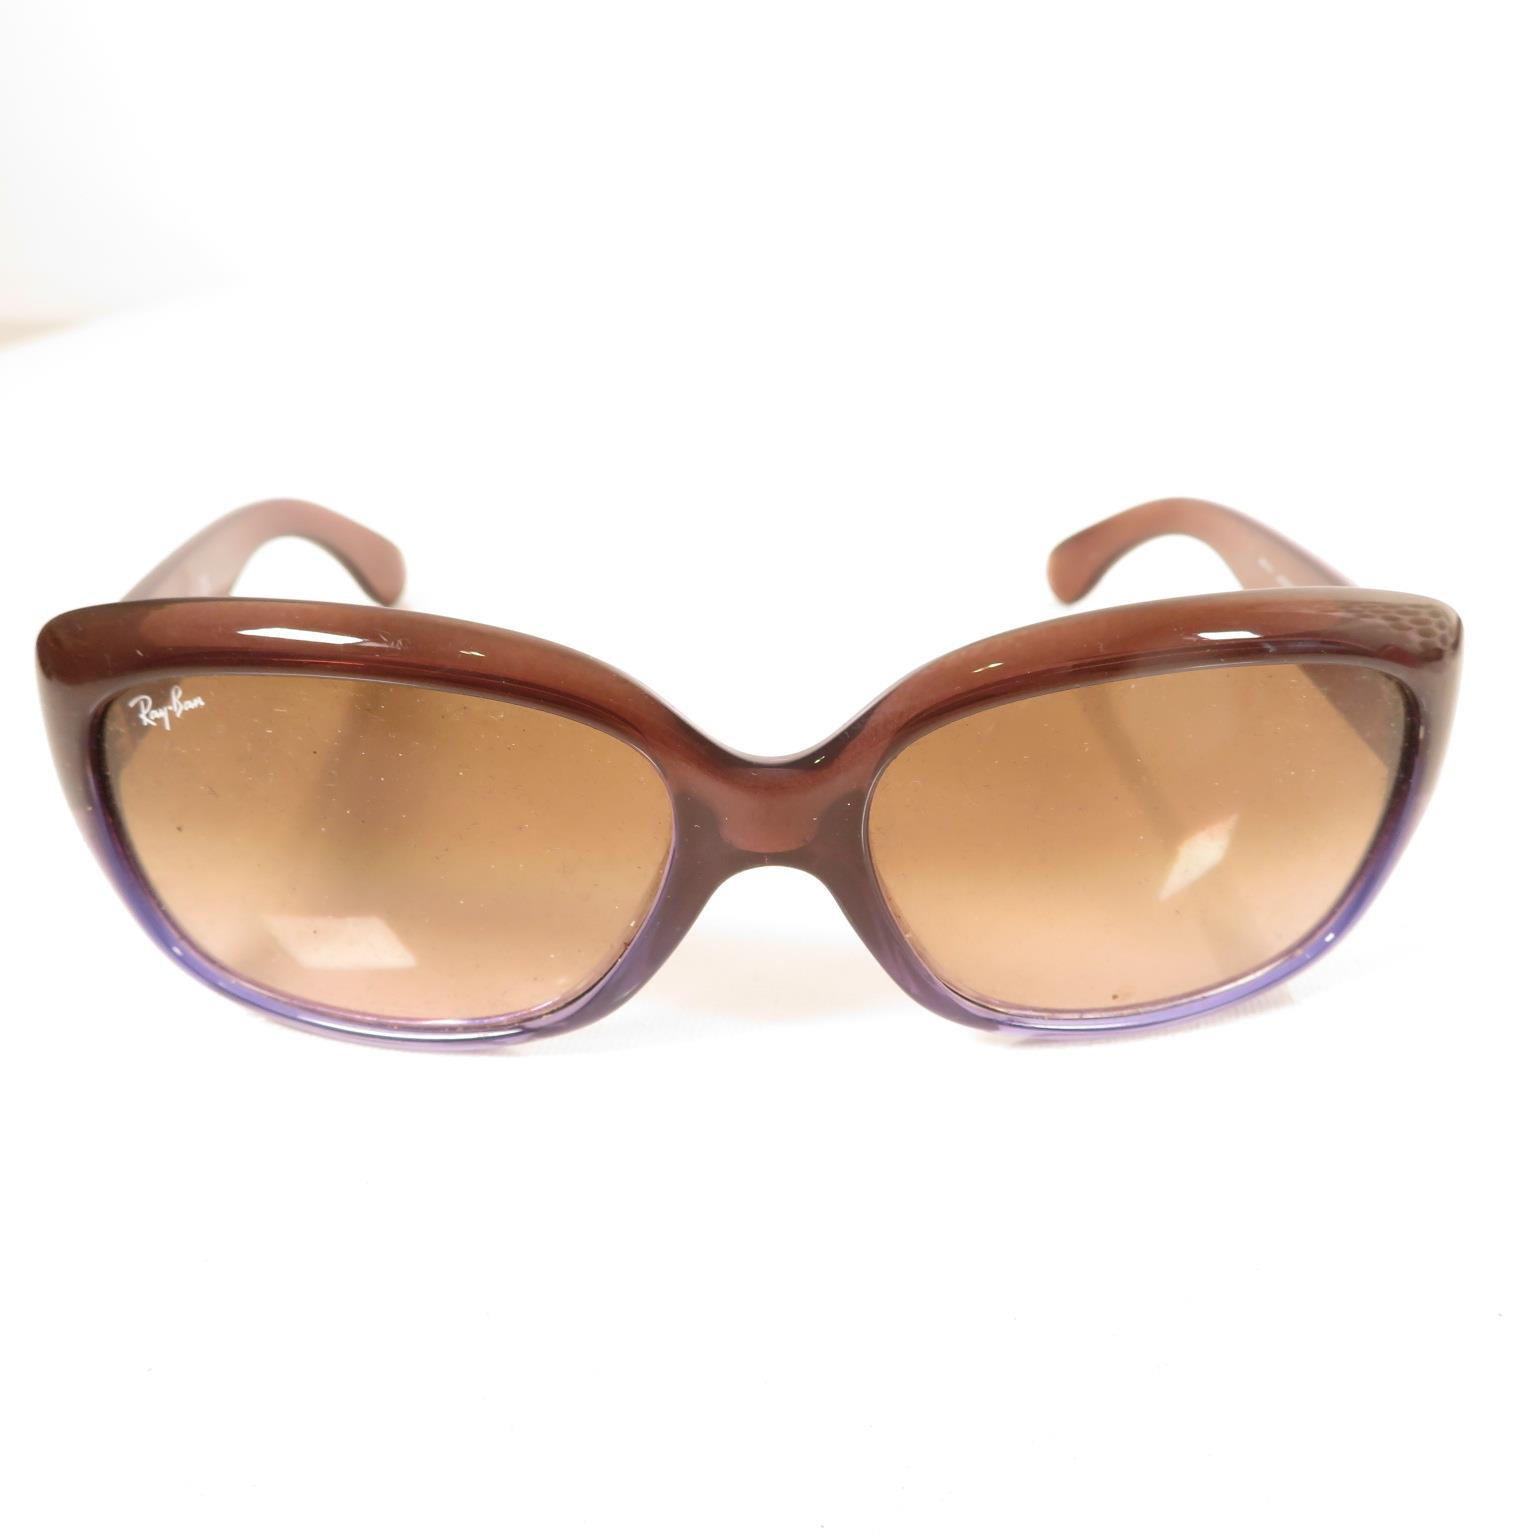 6x pairs Ray Ban sunglasses - - Image 3 of 31